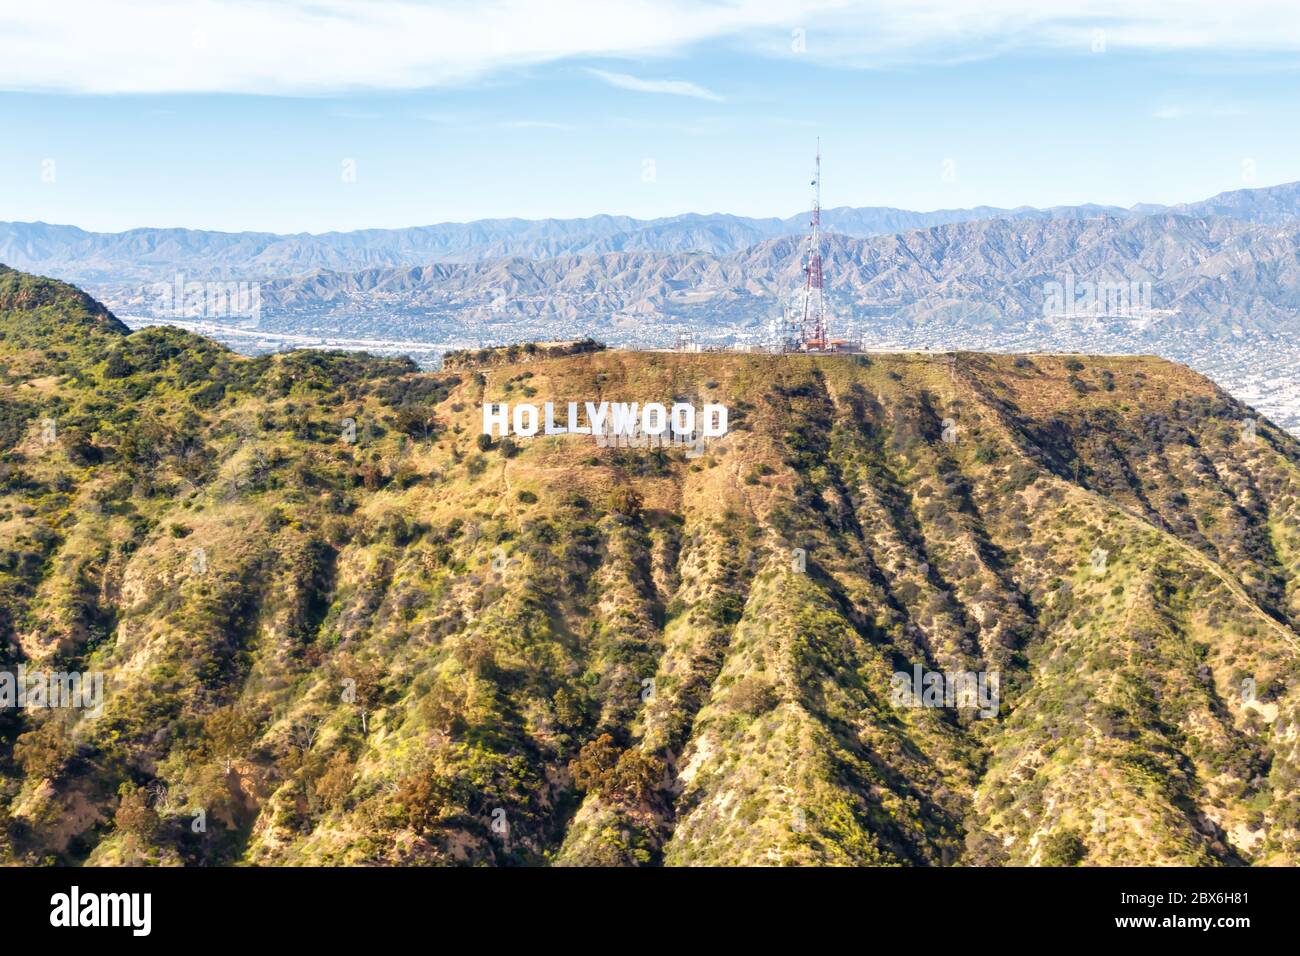 Los Angeles, Kalifornien - 14. April 2019: Hollywood Zeichen Los Angeles Luftaufnahme Hügel in Kalifornien. Stockfoto